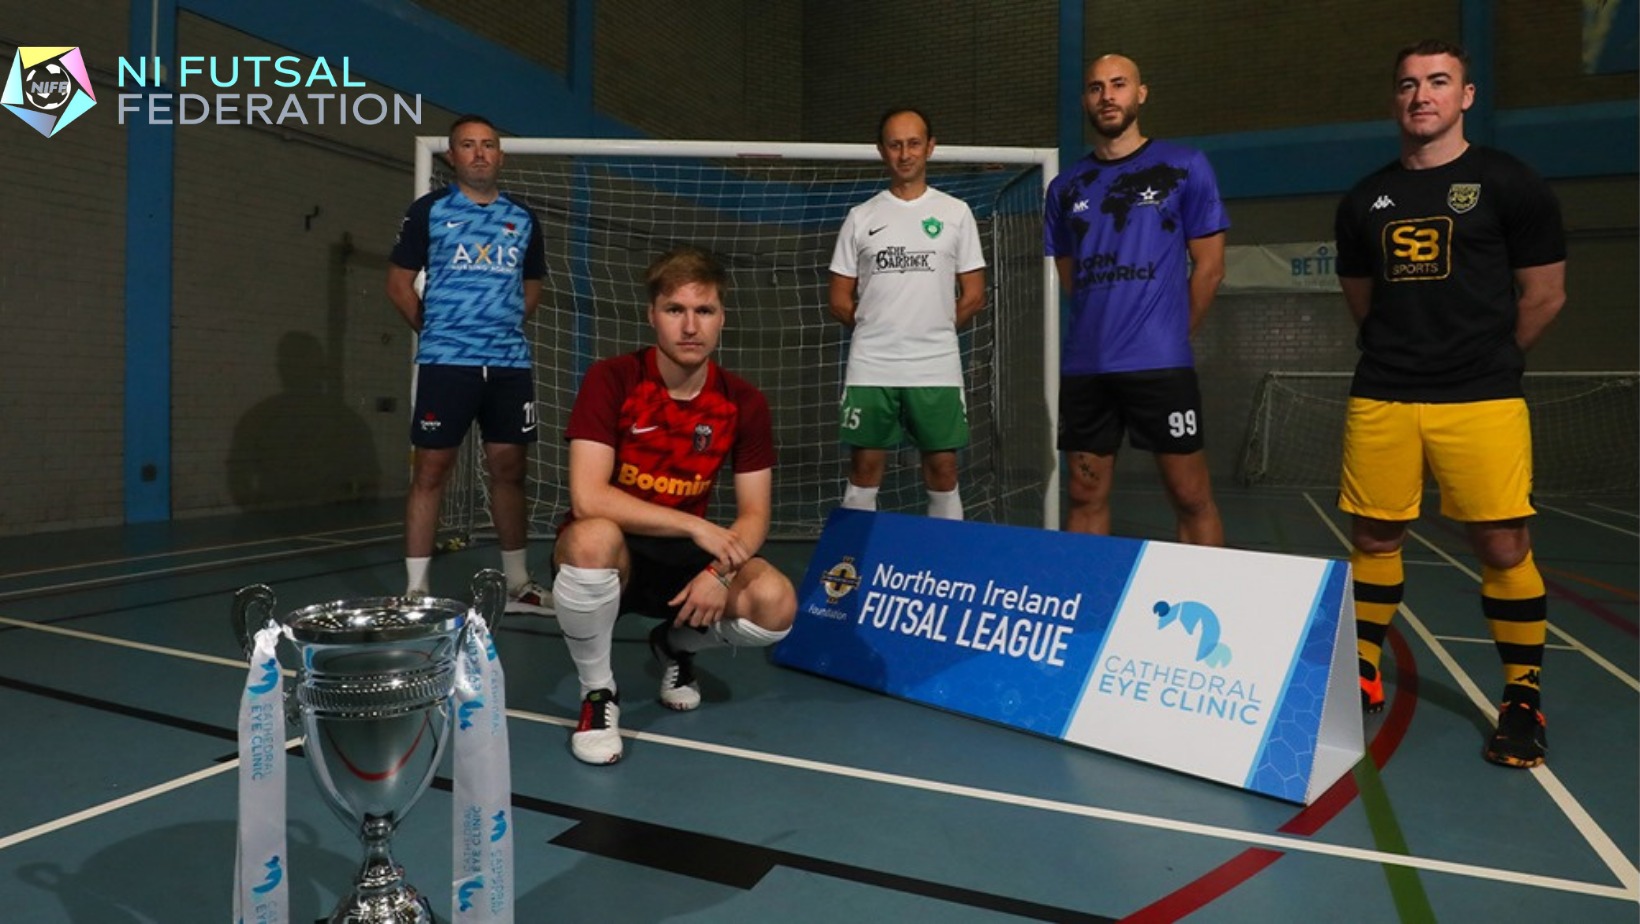 Irish Football Association launches the Northern Ireland Futsal Federation 